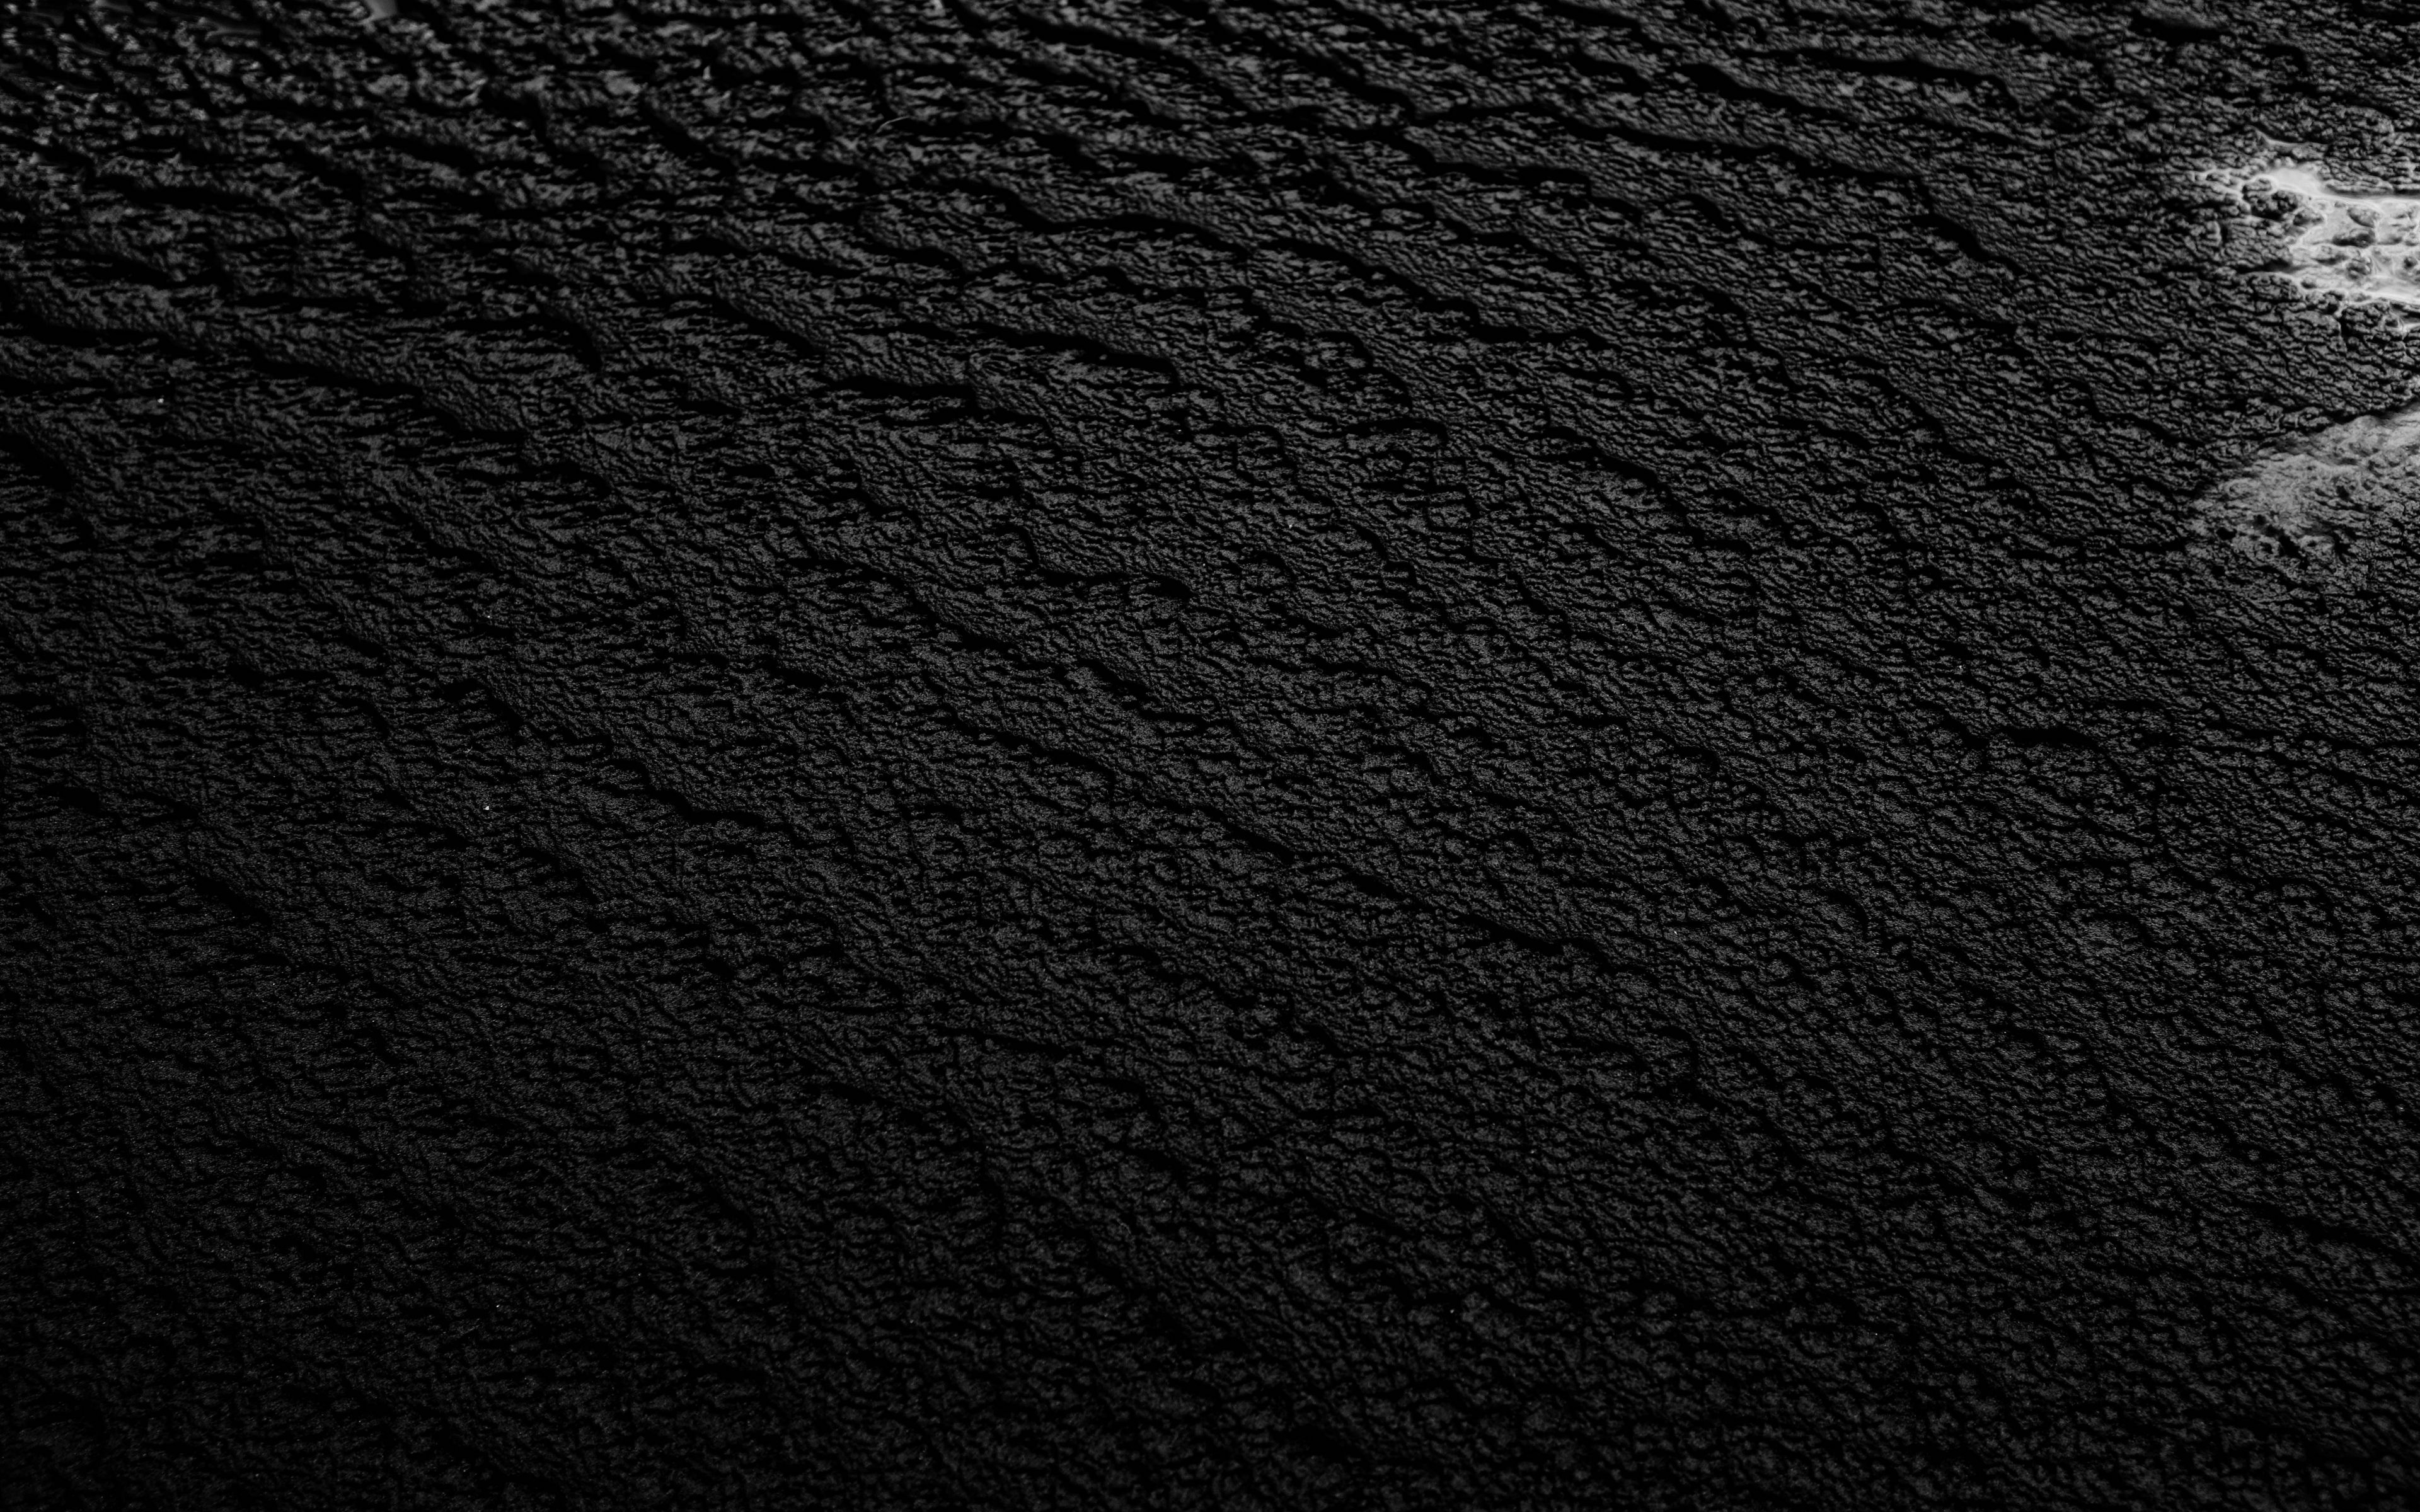 Download wallpaper 3840x2400 texture, surface, black, embossed, dark 4k  ultra hd 16:10 hd background